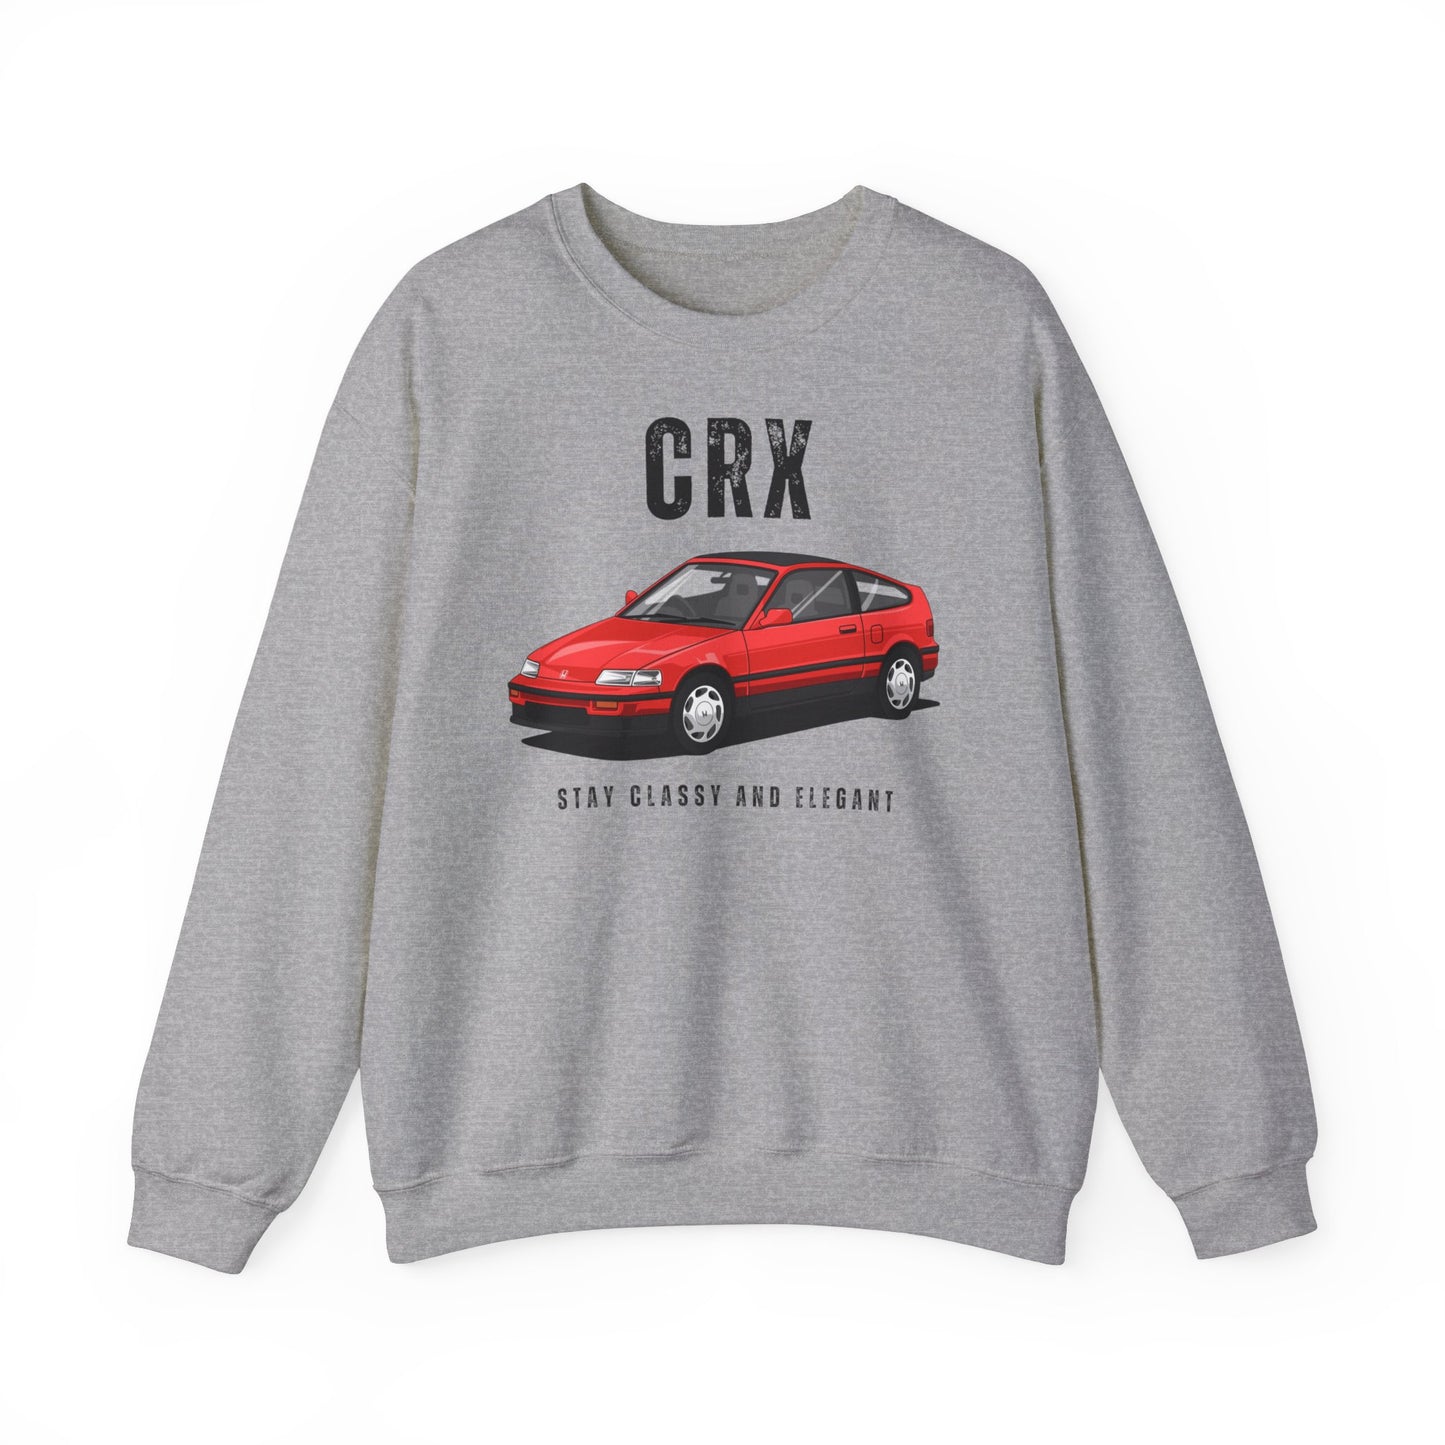 DTC - Honda Crx Stay Classy And Elegant Sweatshirt